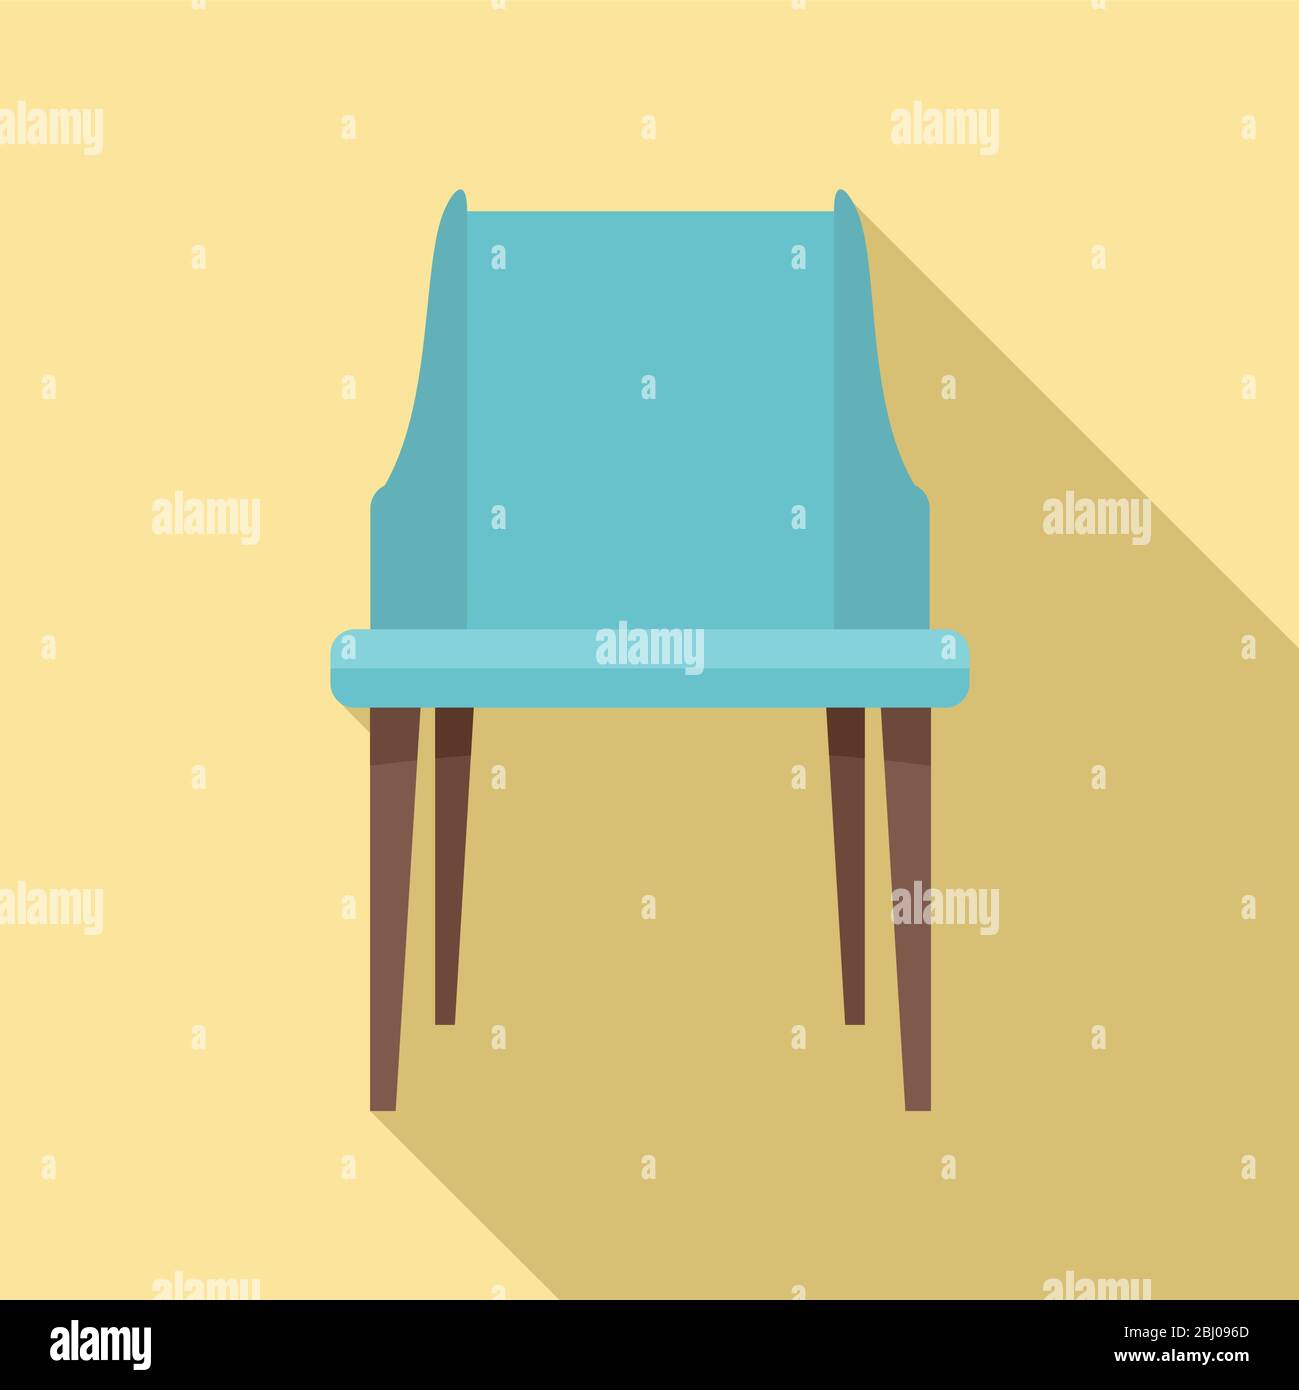 Symbol für Stuhl aus Holz und Kunststoff. Flache Illustration von Holz Kunststoff Stuhl Vektor-Symbol für Web-Design Stock Vektor